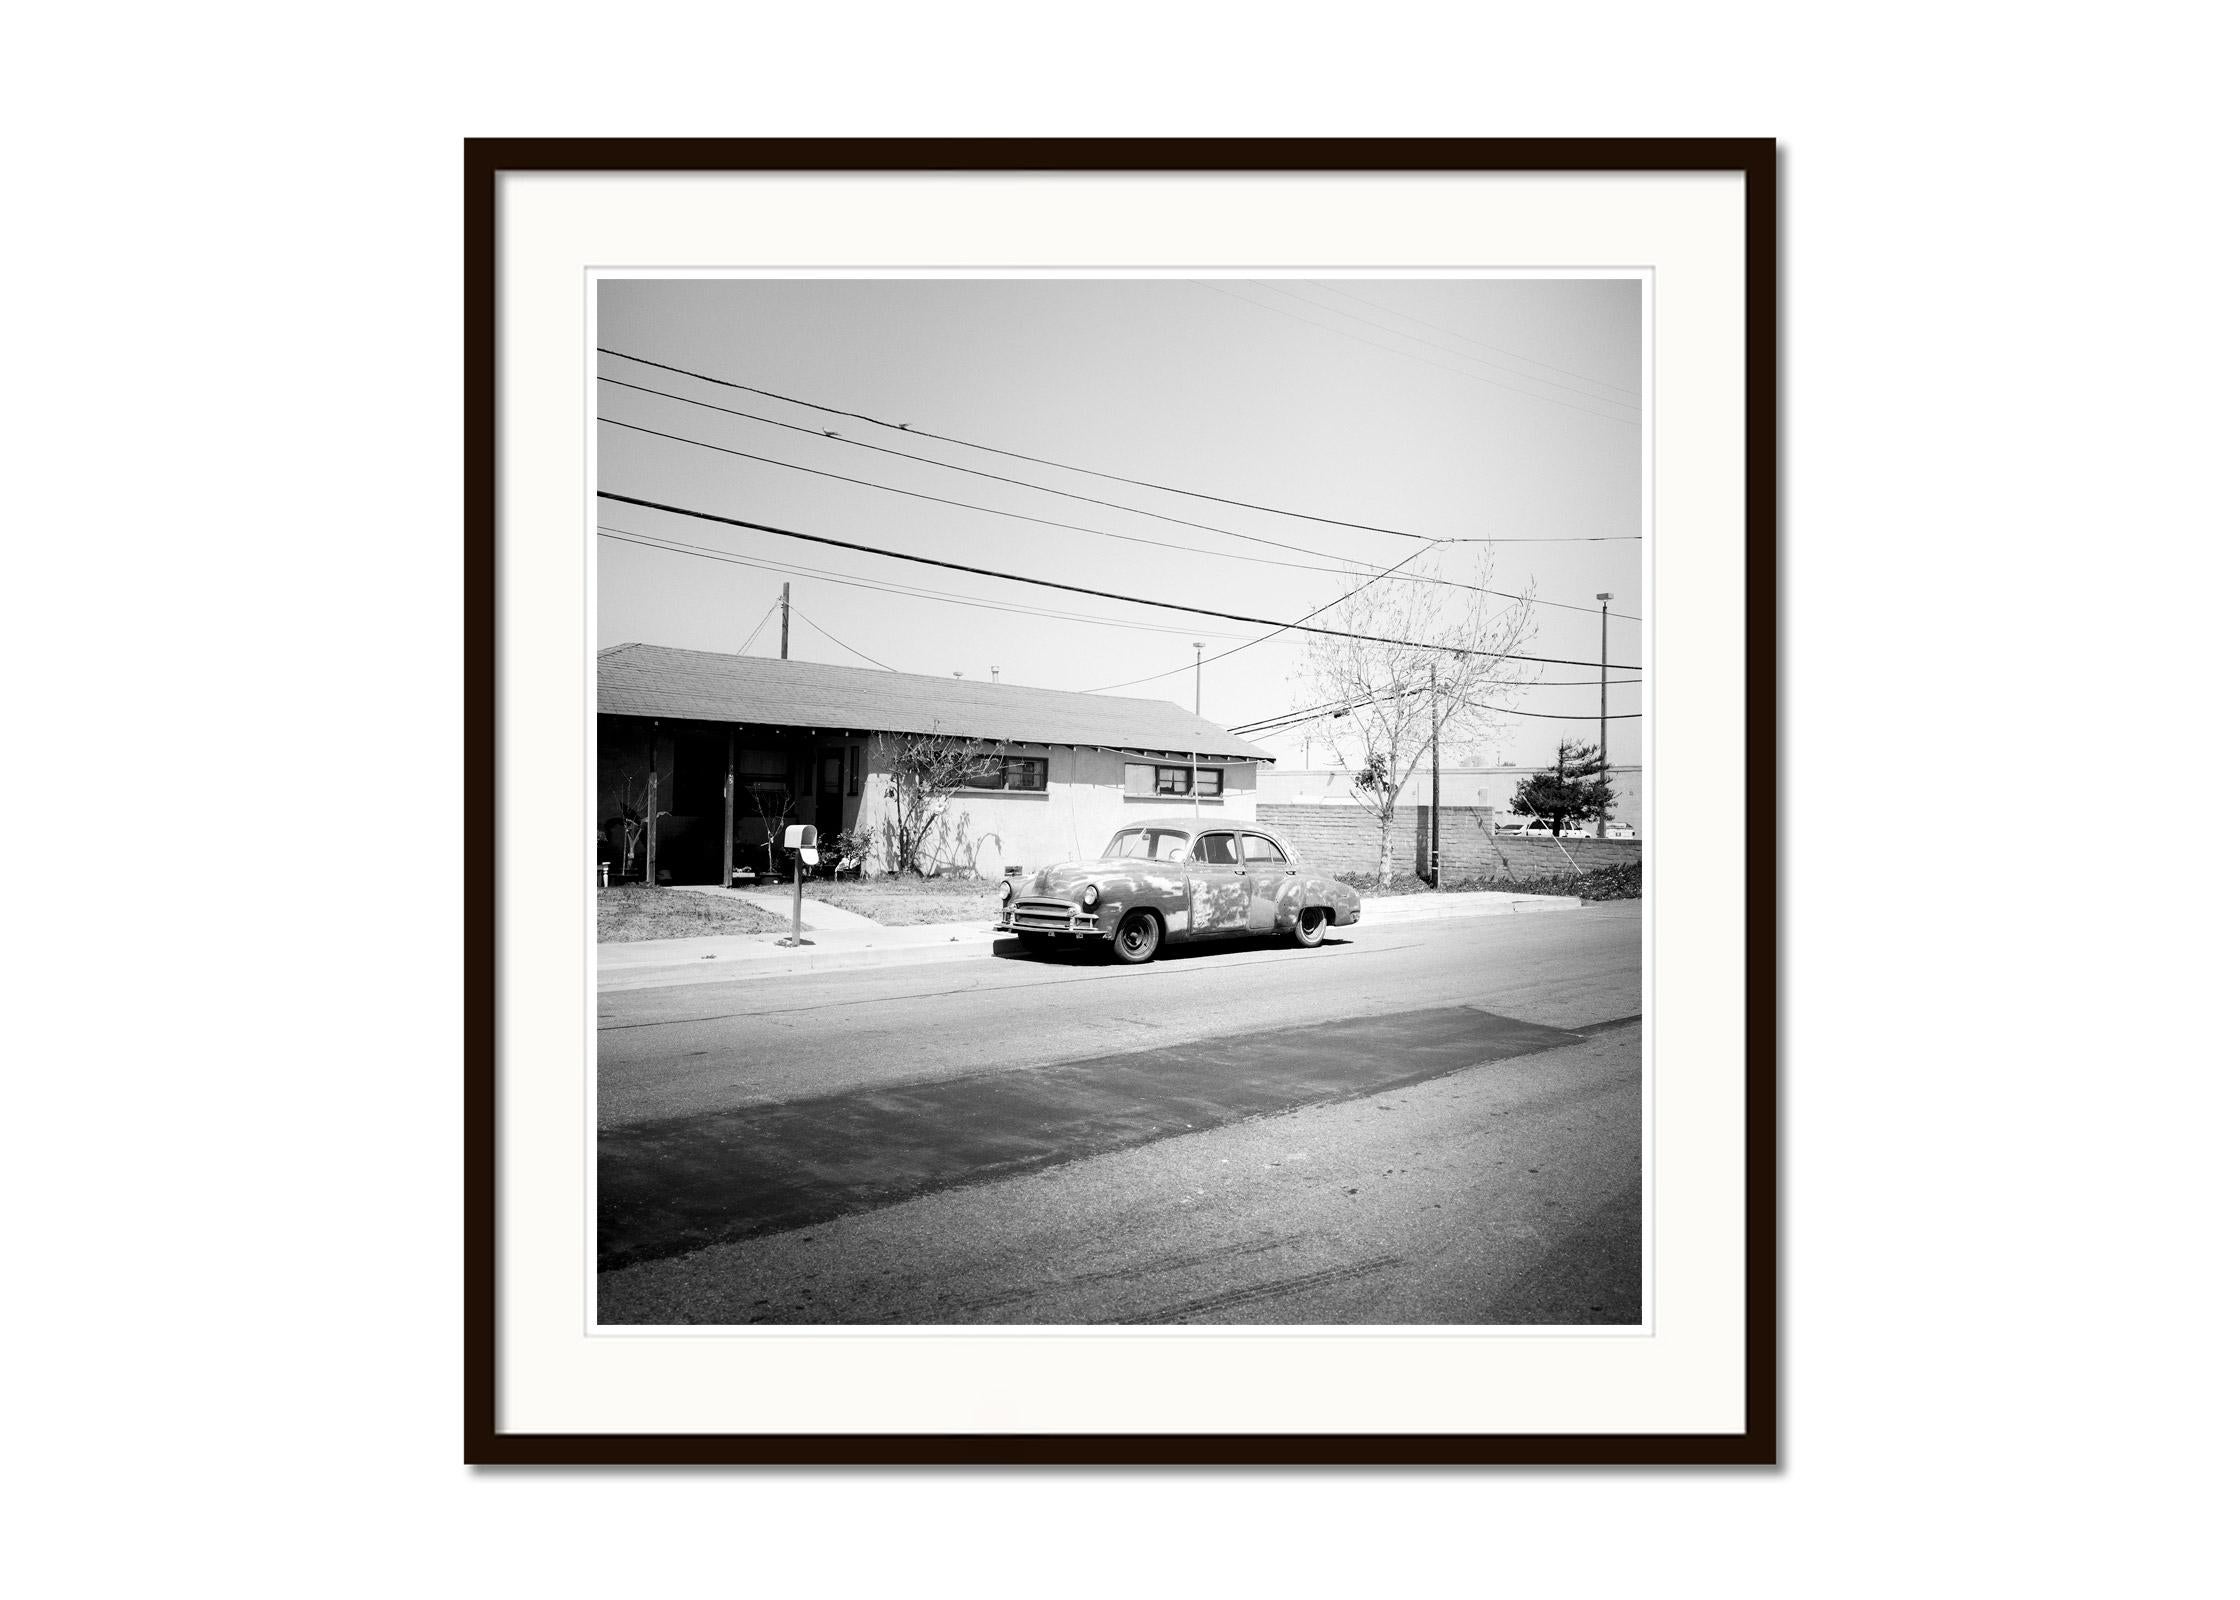 House, Classic Car, Arizona, USA, Black & White landscape photography art print - Gray Landscape Photograph by Gerald Berghammer